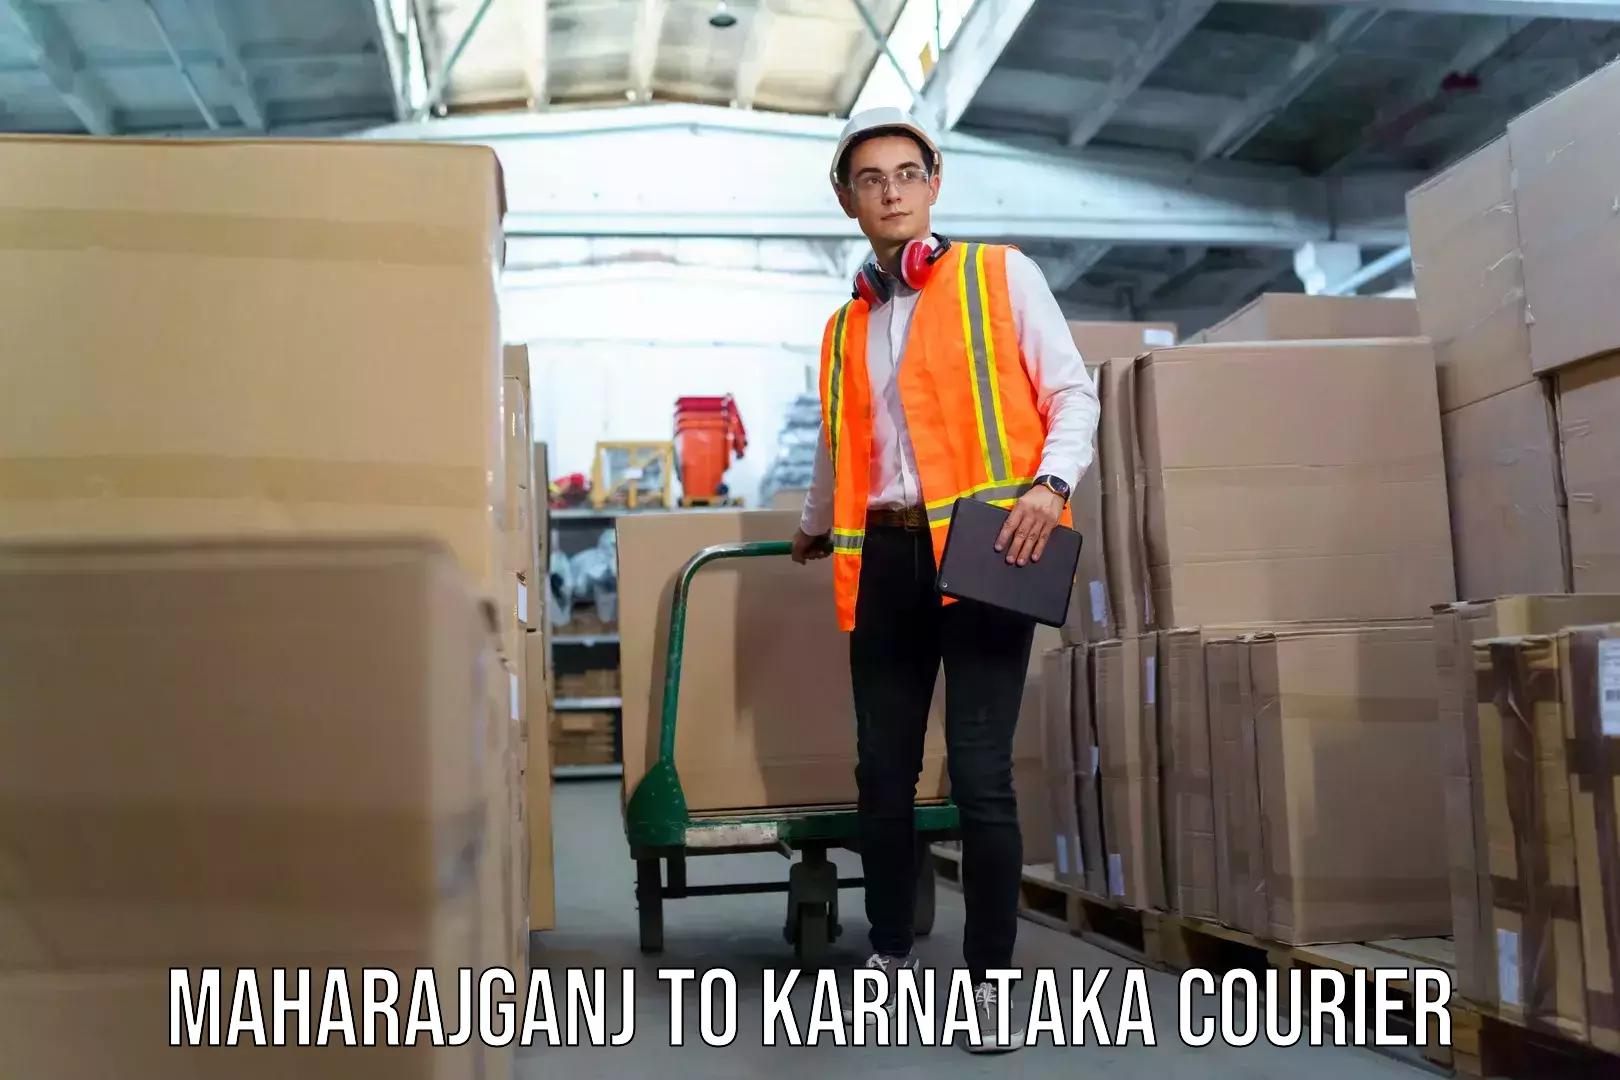 Luggage transport consultancy Maharajganj to Karnataka